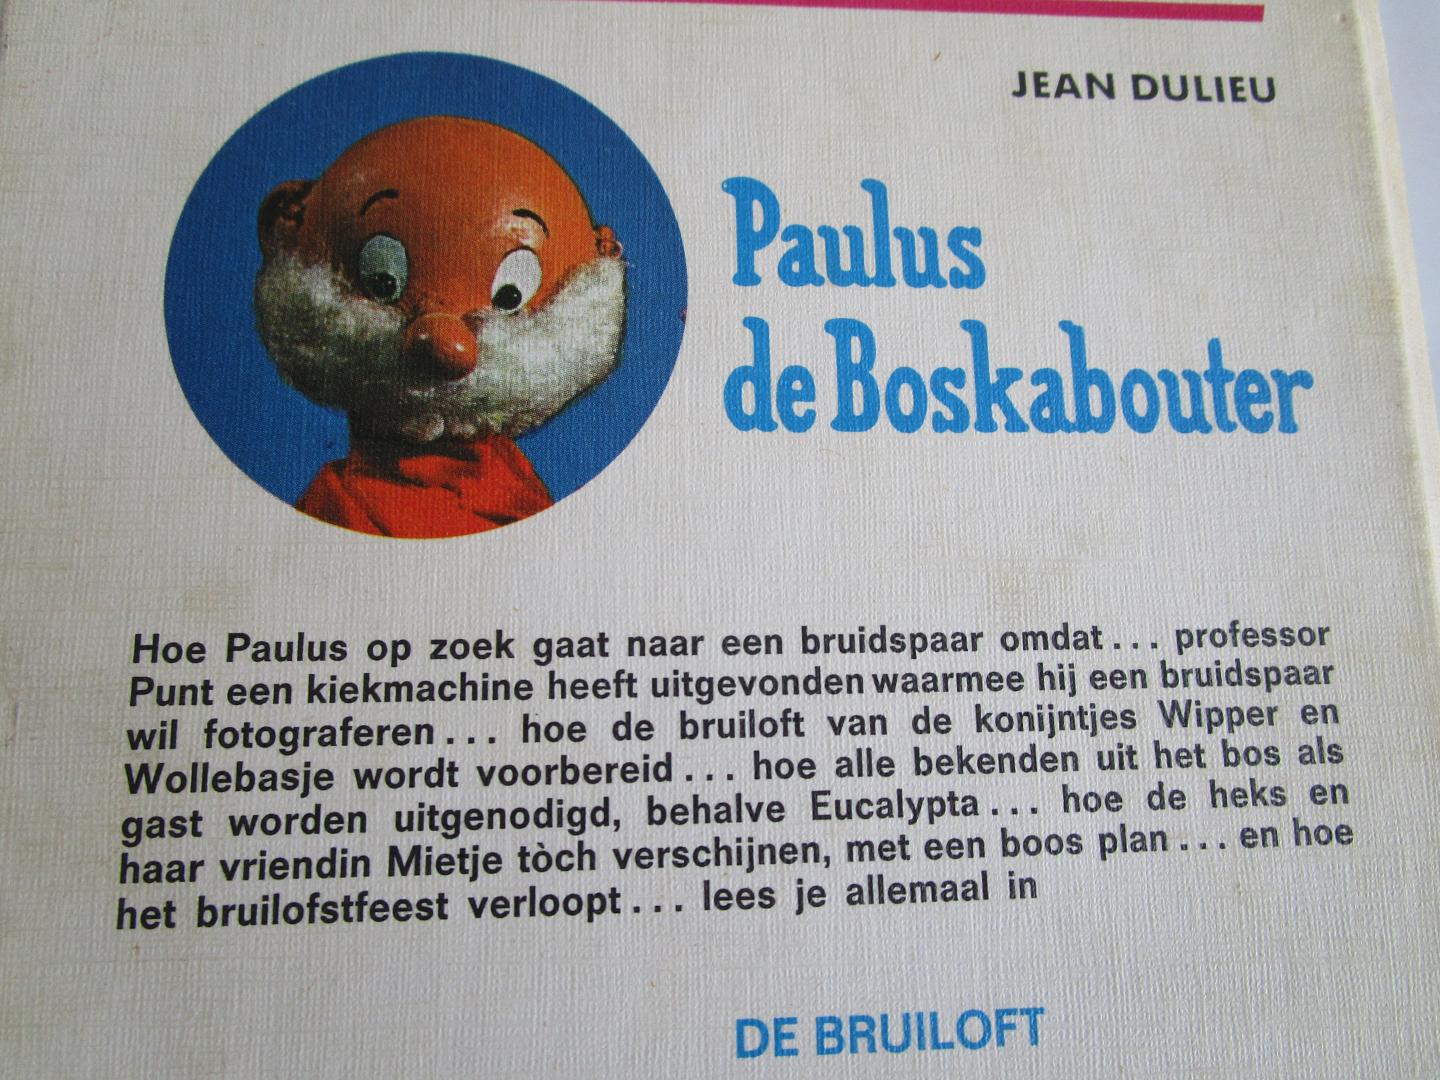 Dulieu, Jean - Paulus de boskabouter  - De Bruiloft -